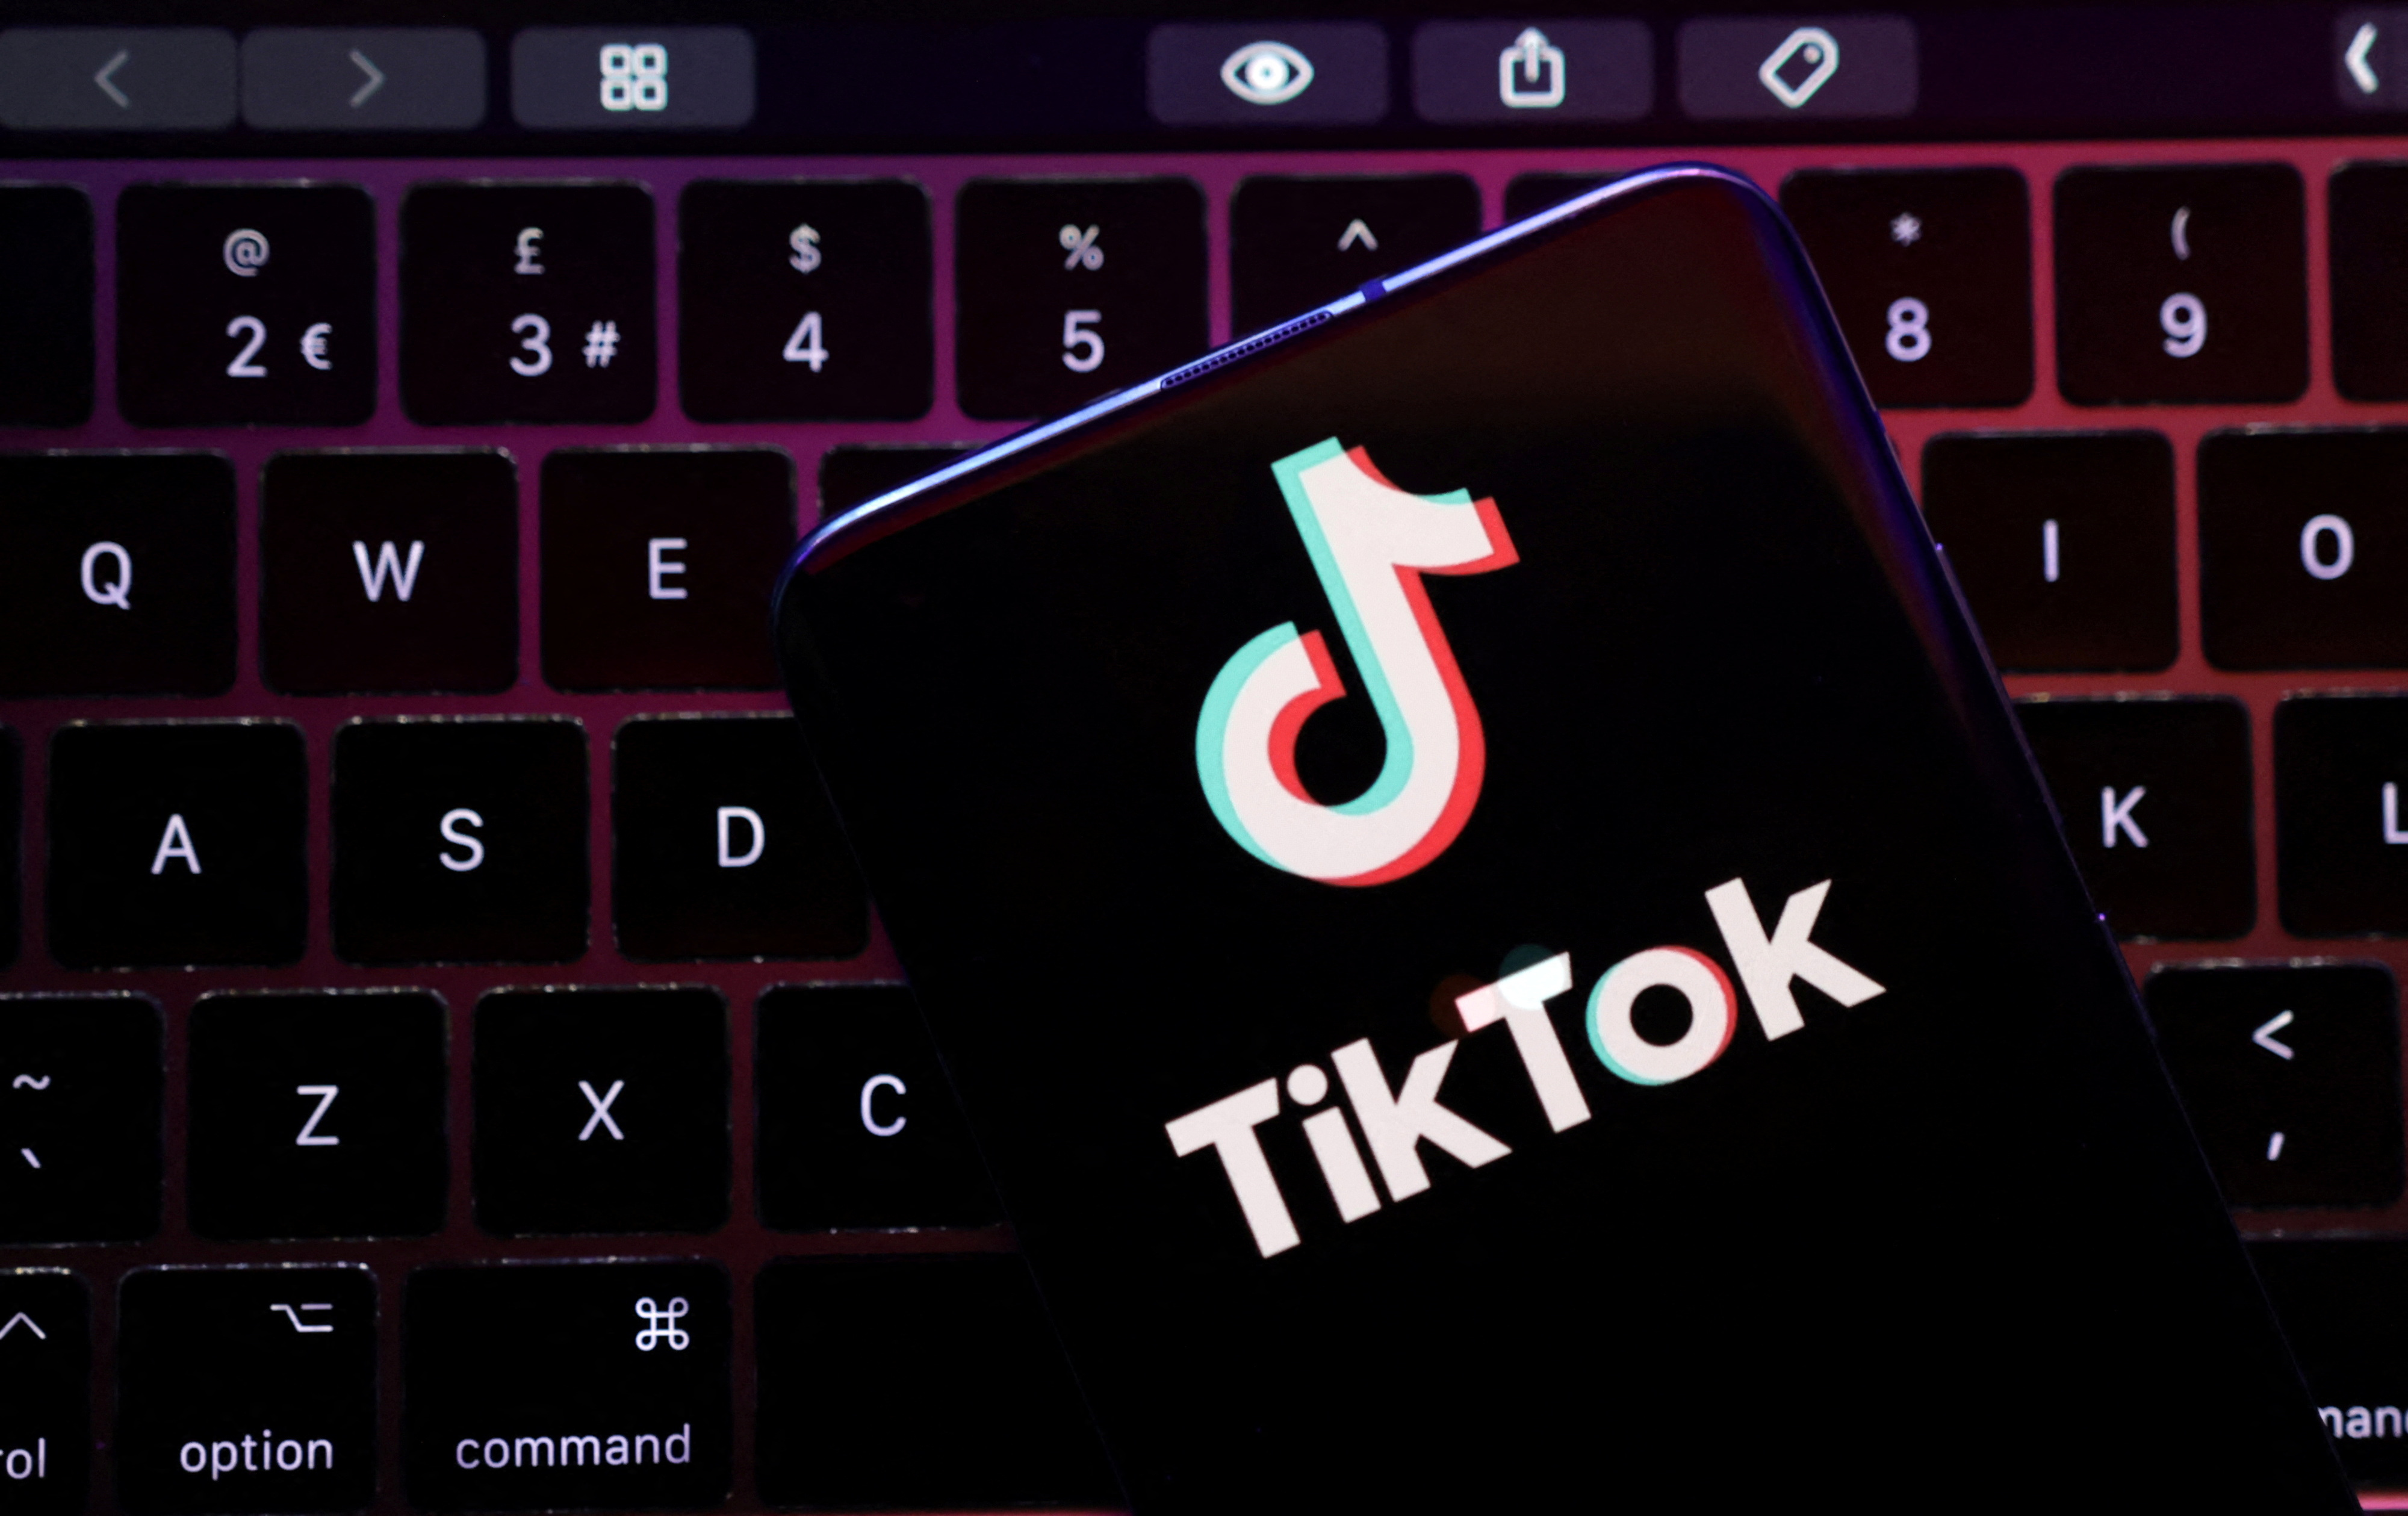 Illustration shows TikTok app logo